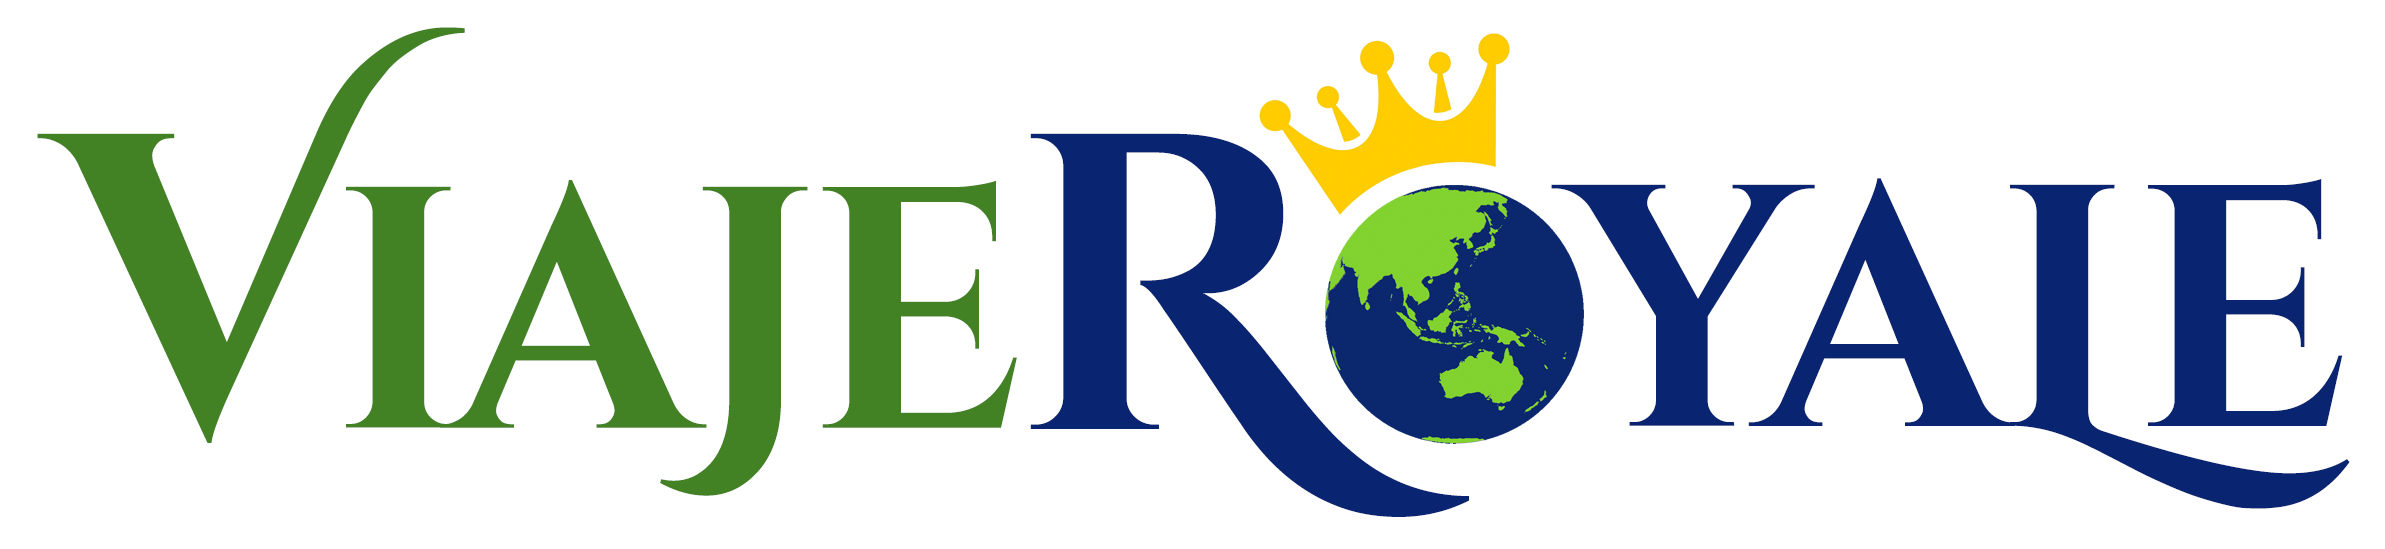 viaje royale logo